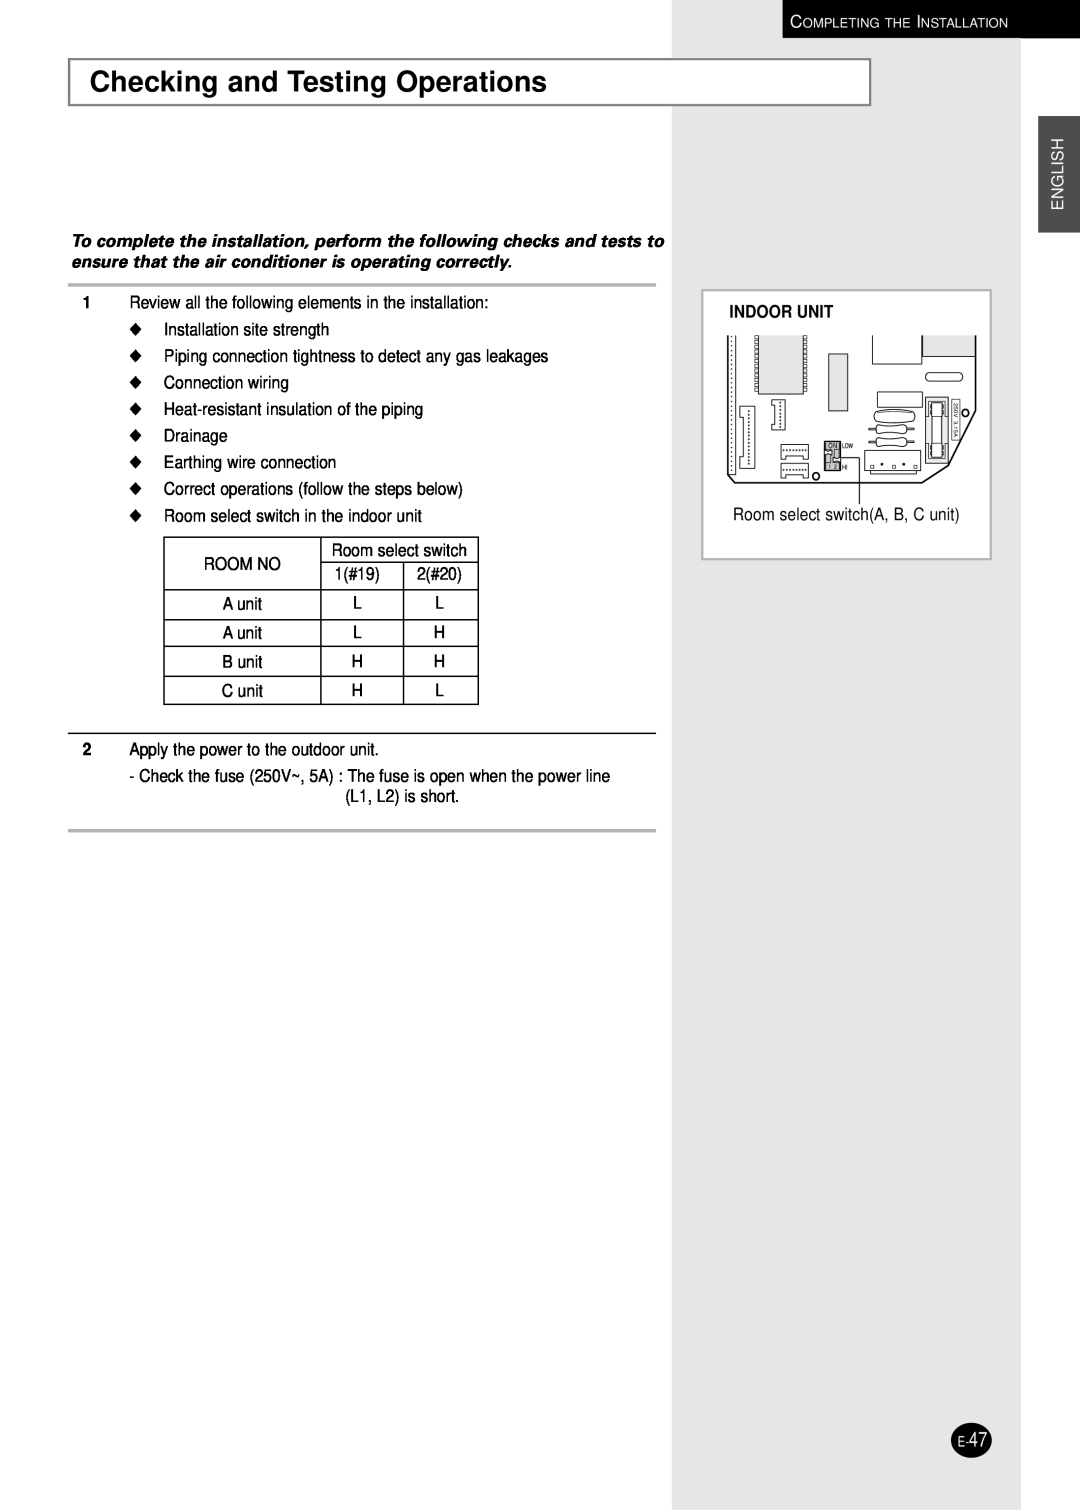 Samsung AD18B1C09 installation manual Checking and Testing Operations, English, Indoor Unit 